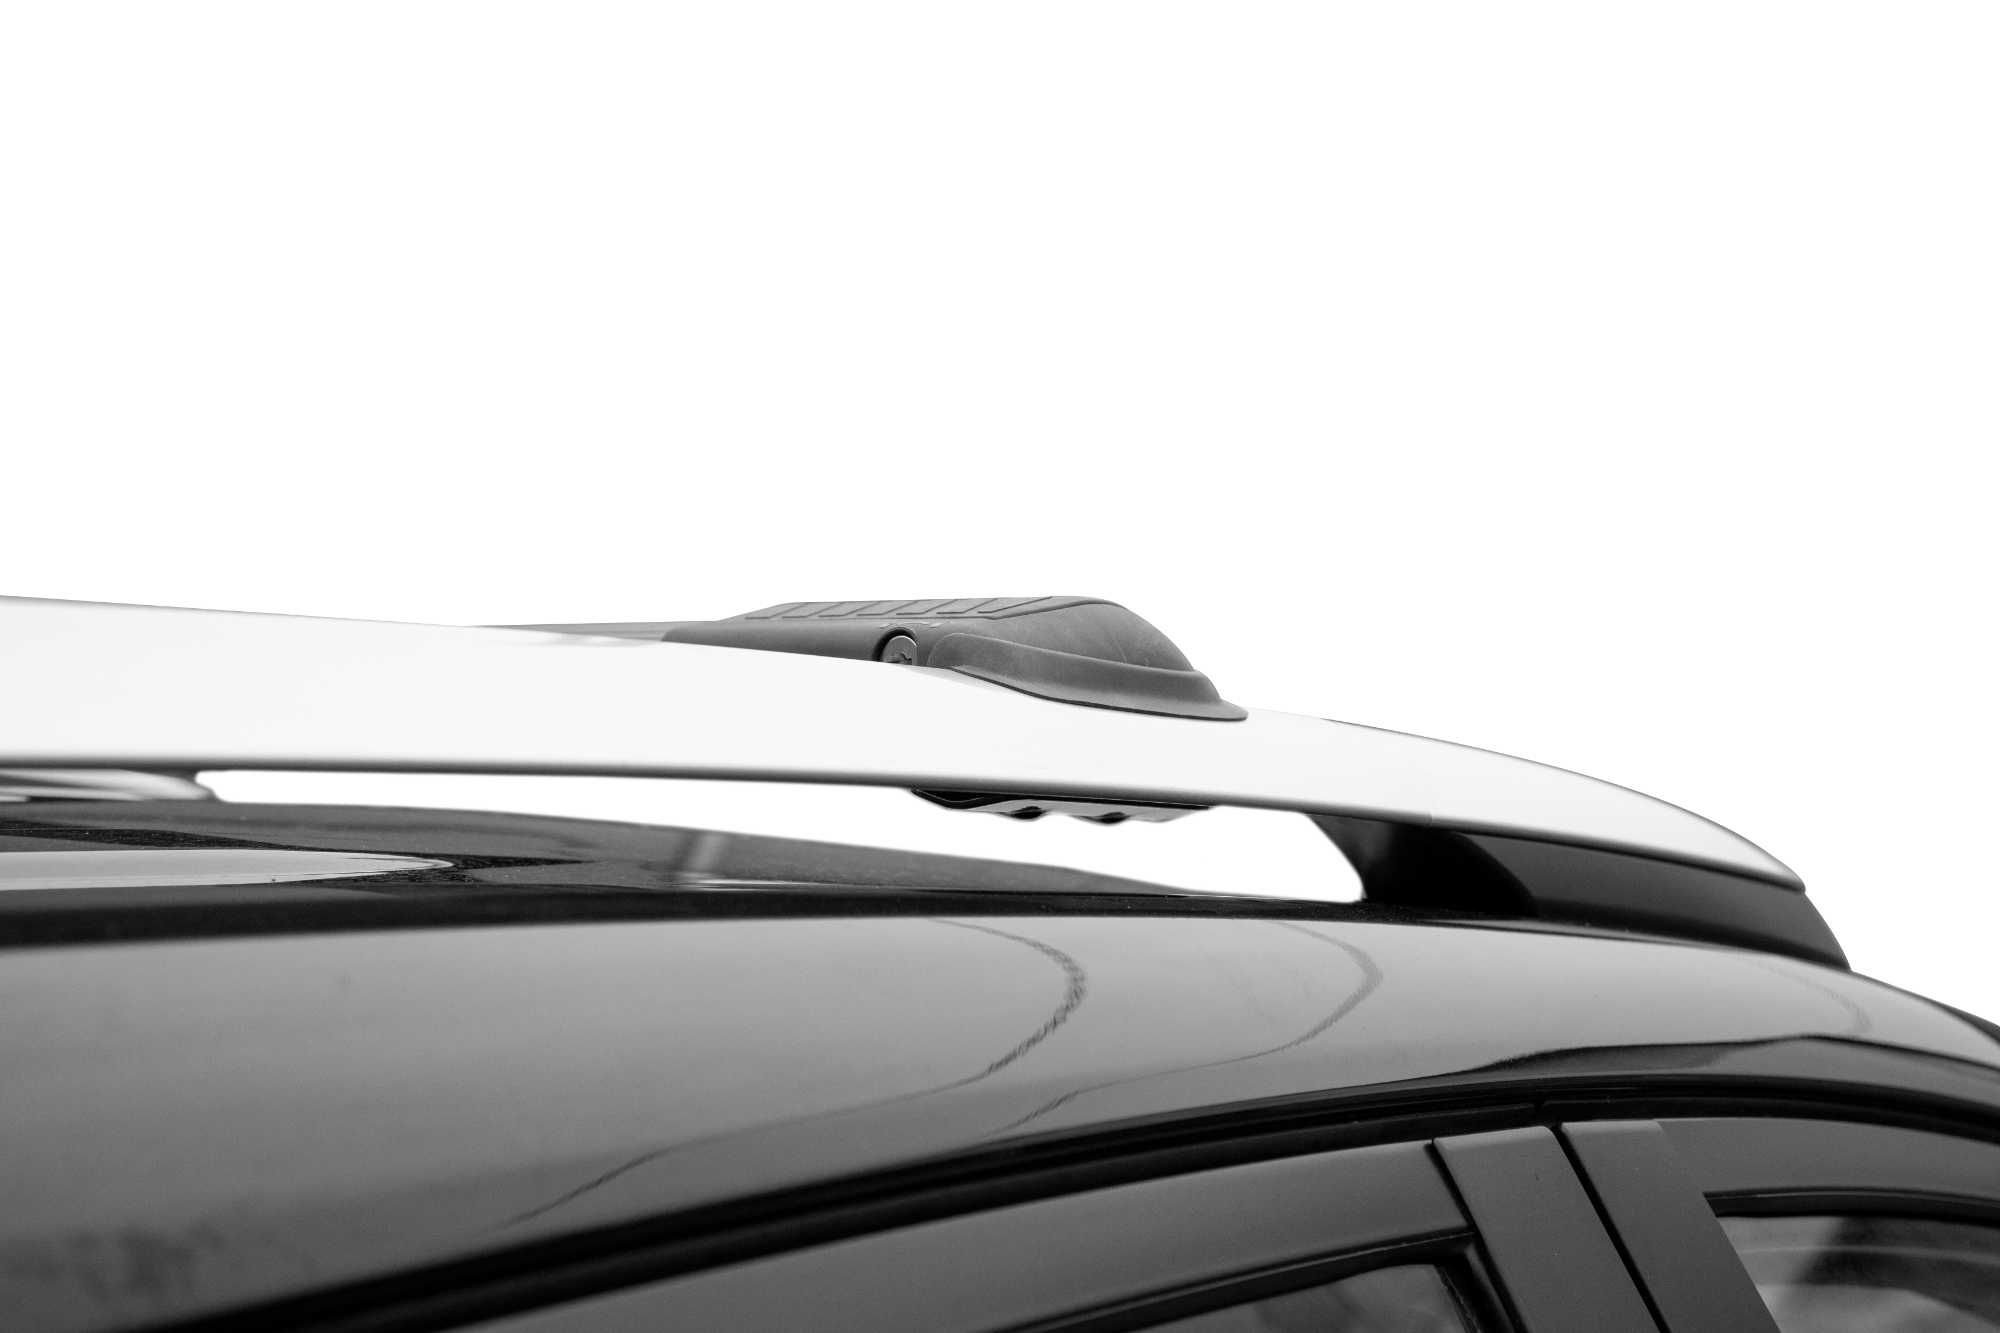 Багажник на крышу Toyota, Kia, Nissan, Hyundai, BMW, Mercedes-Benz LUX